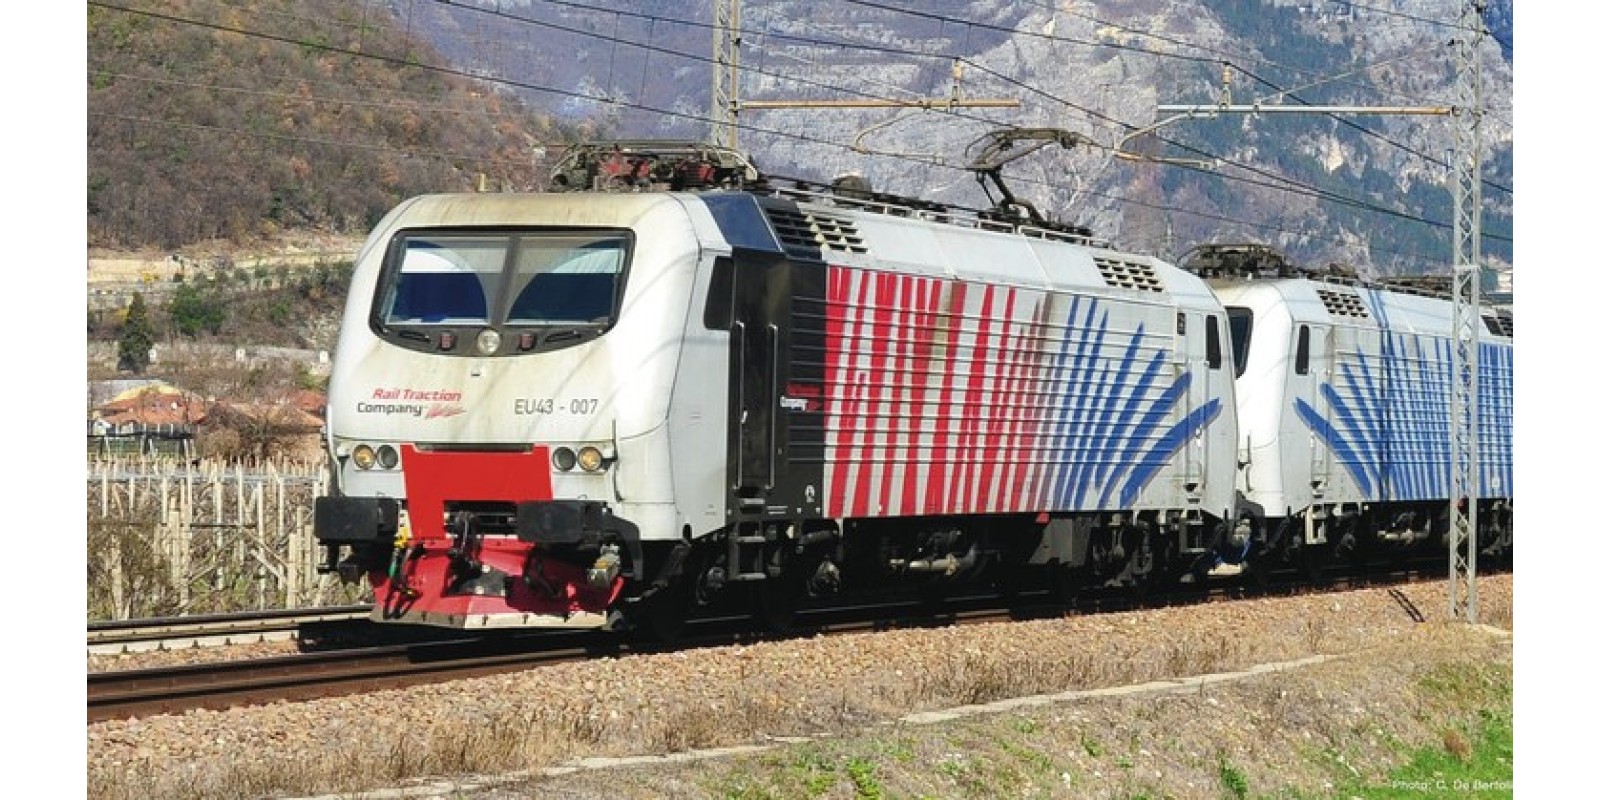 RO79679 - Electric locomotive EU 43-007, Lokomotion